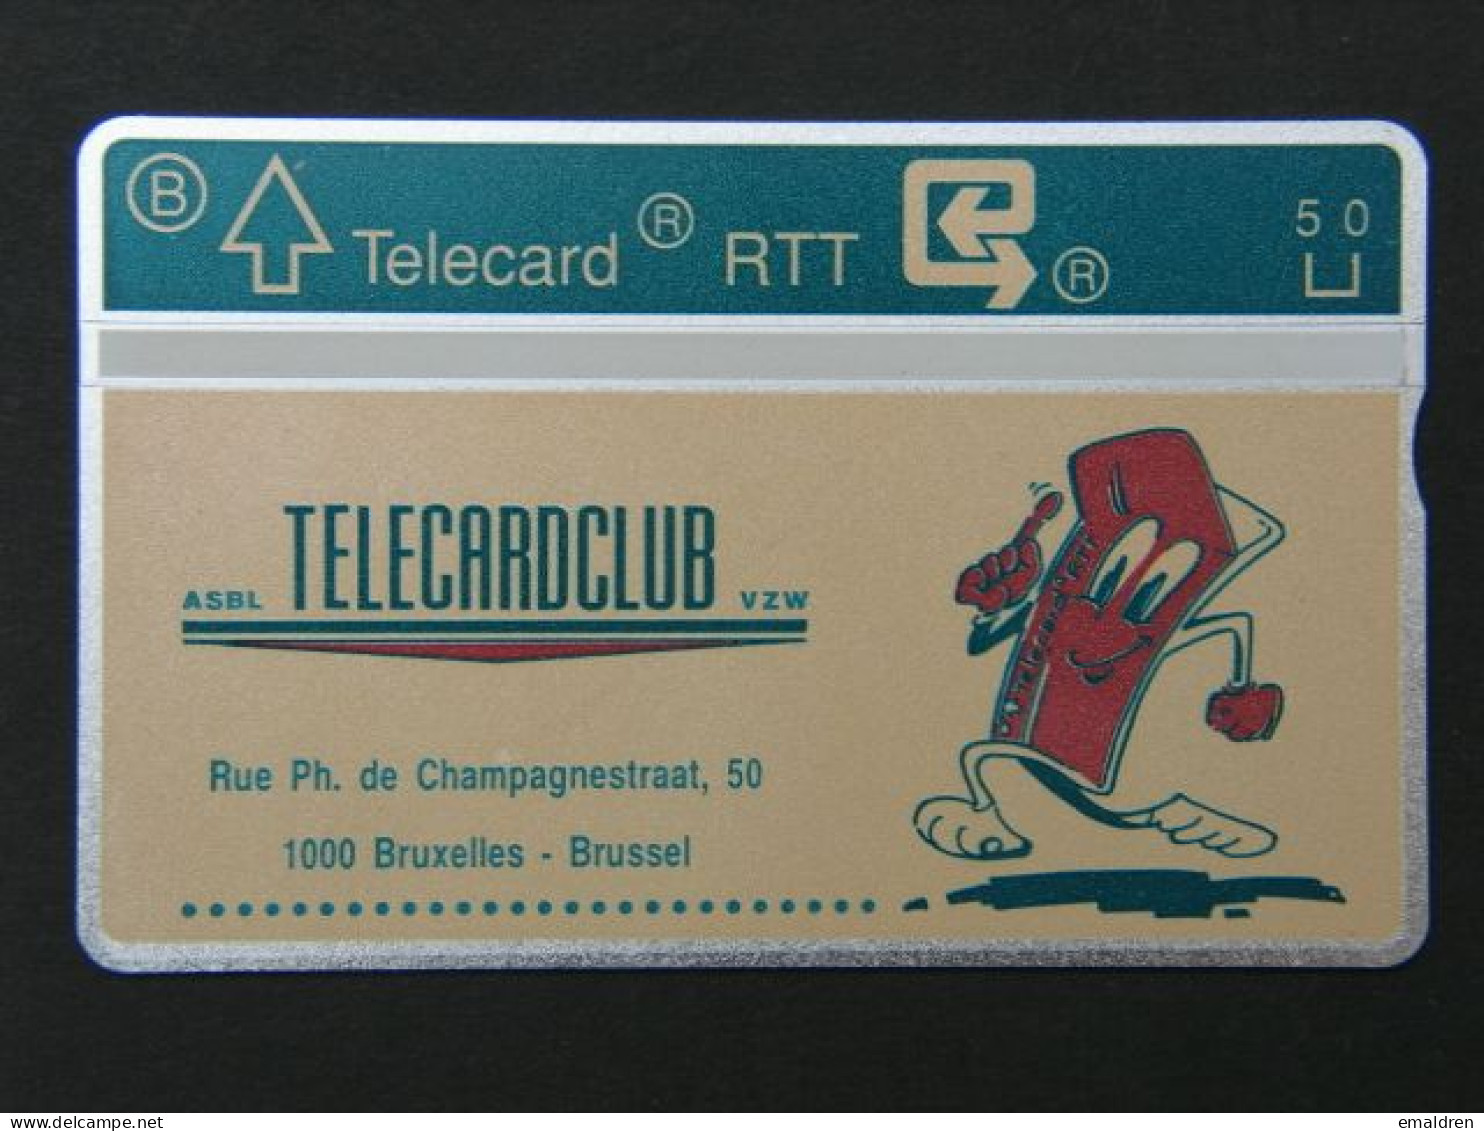 P127. Telecardclub. - Senza Chip